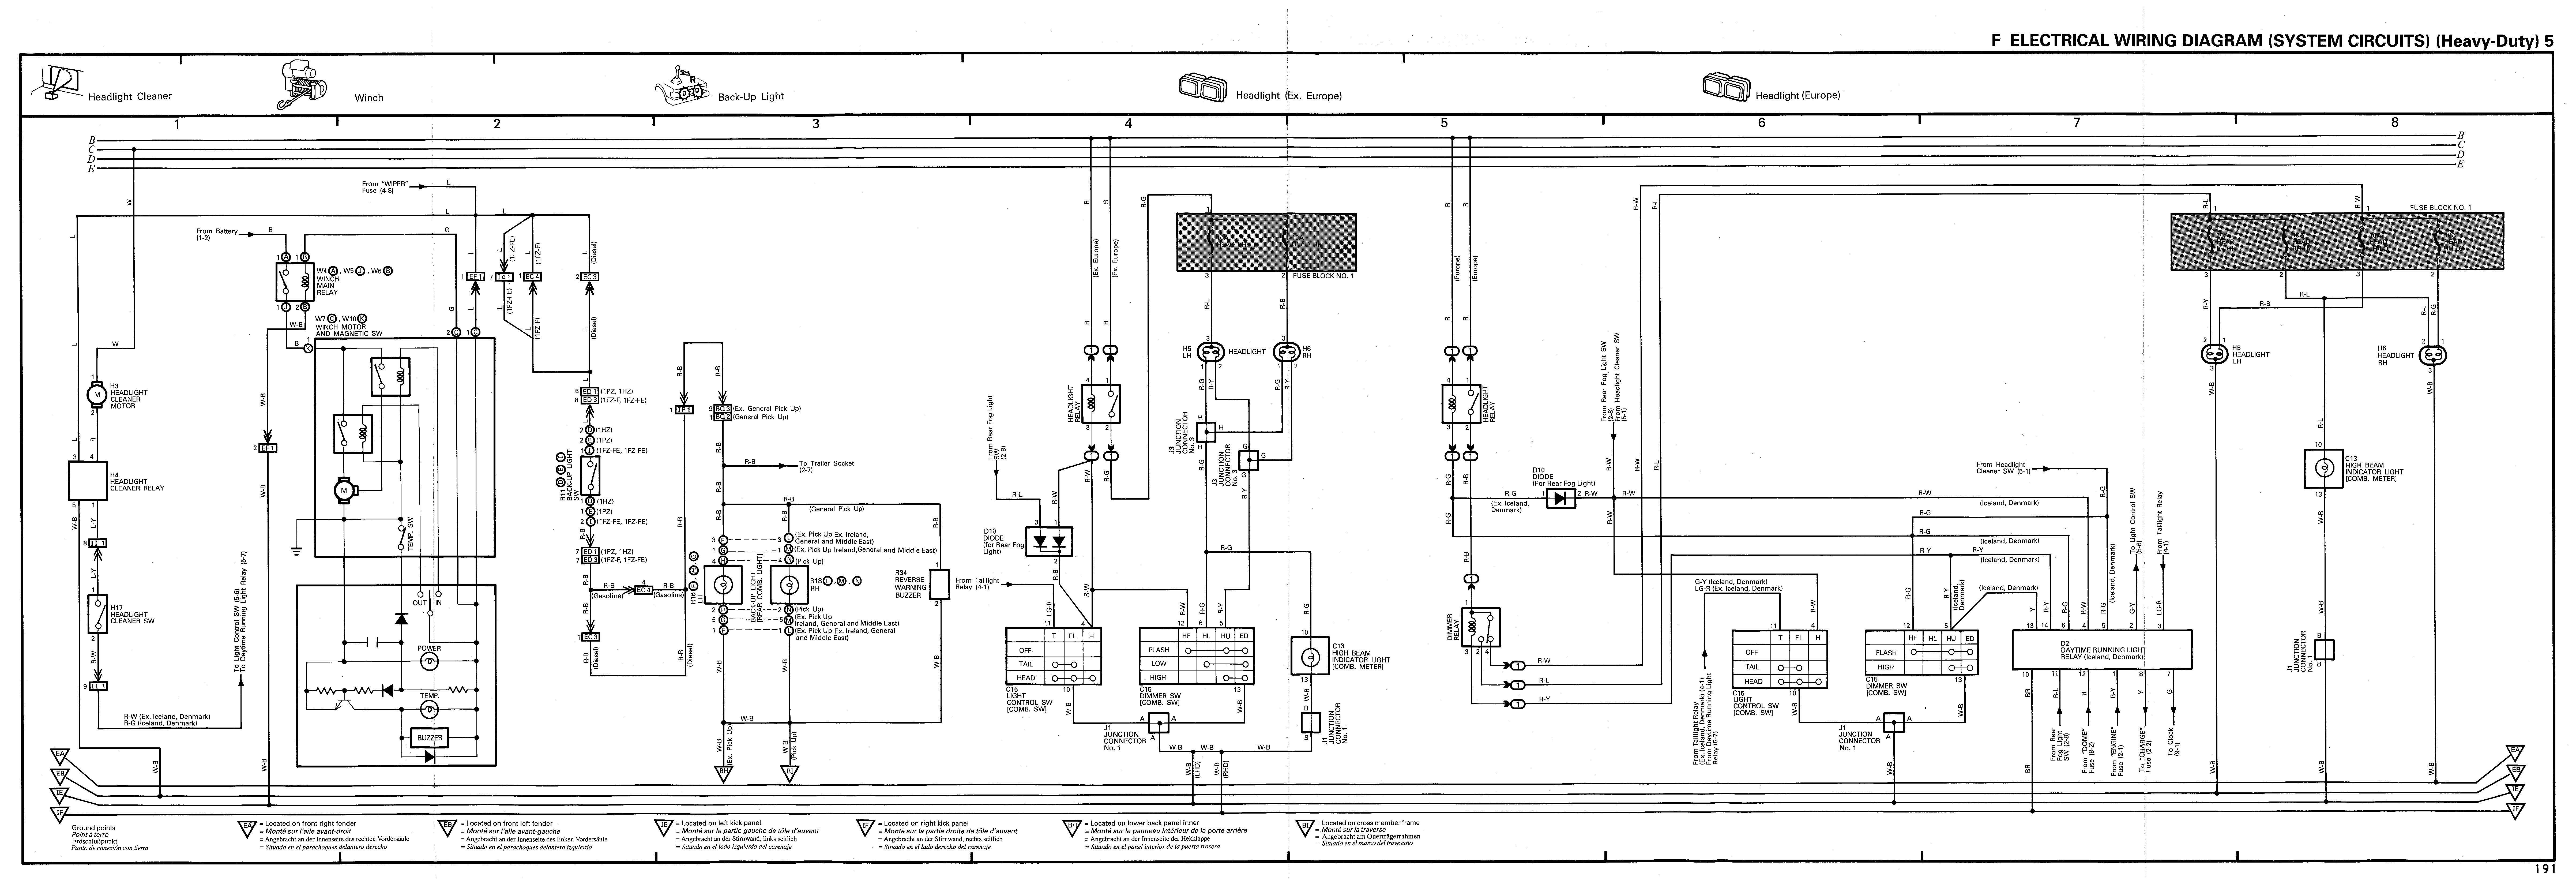 98 toyotum electrical wiring diagram wiring diagram networks  